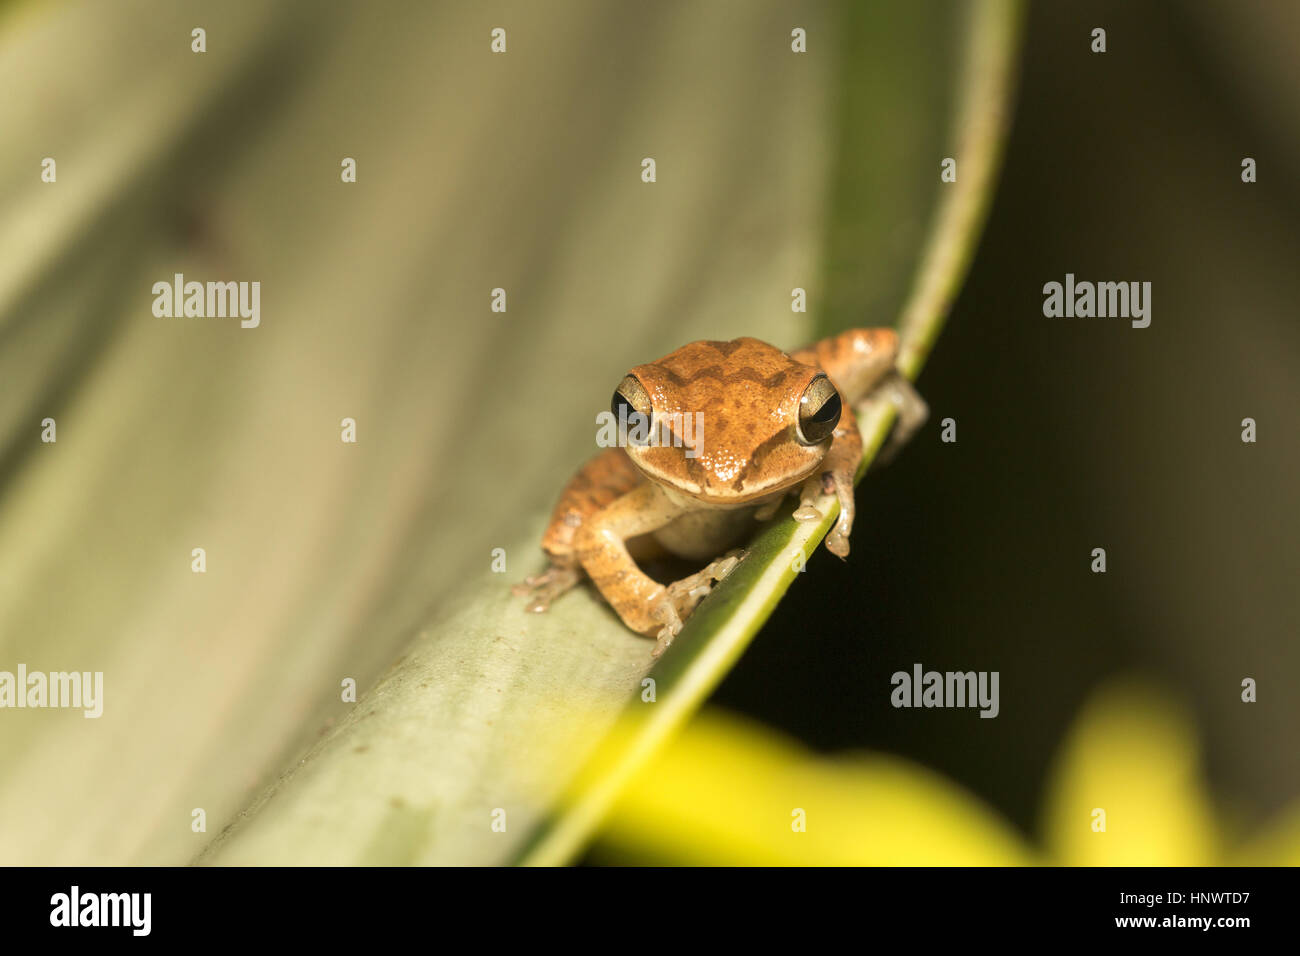 Tree frog, Polypedates sp., Barnawapara WLS, Chhattisgarh. Family Rhacophoridae, the shrub frogs and Paleotropic tree frogs. Stock Photo